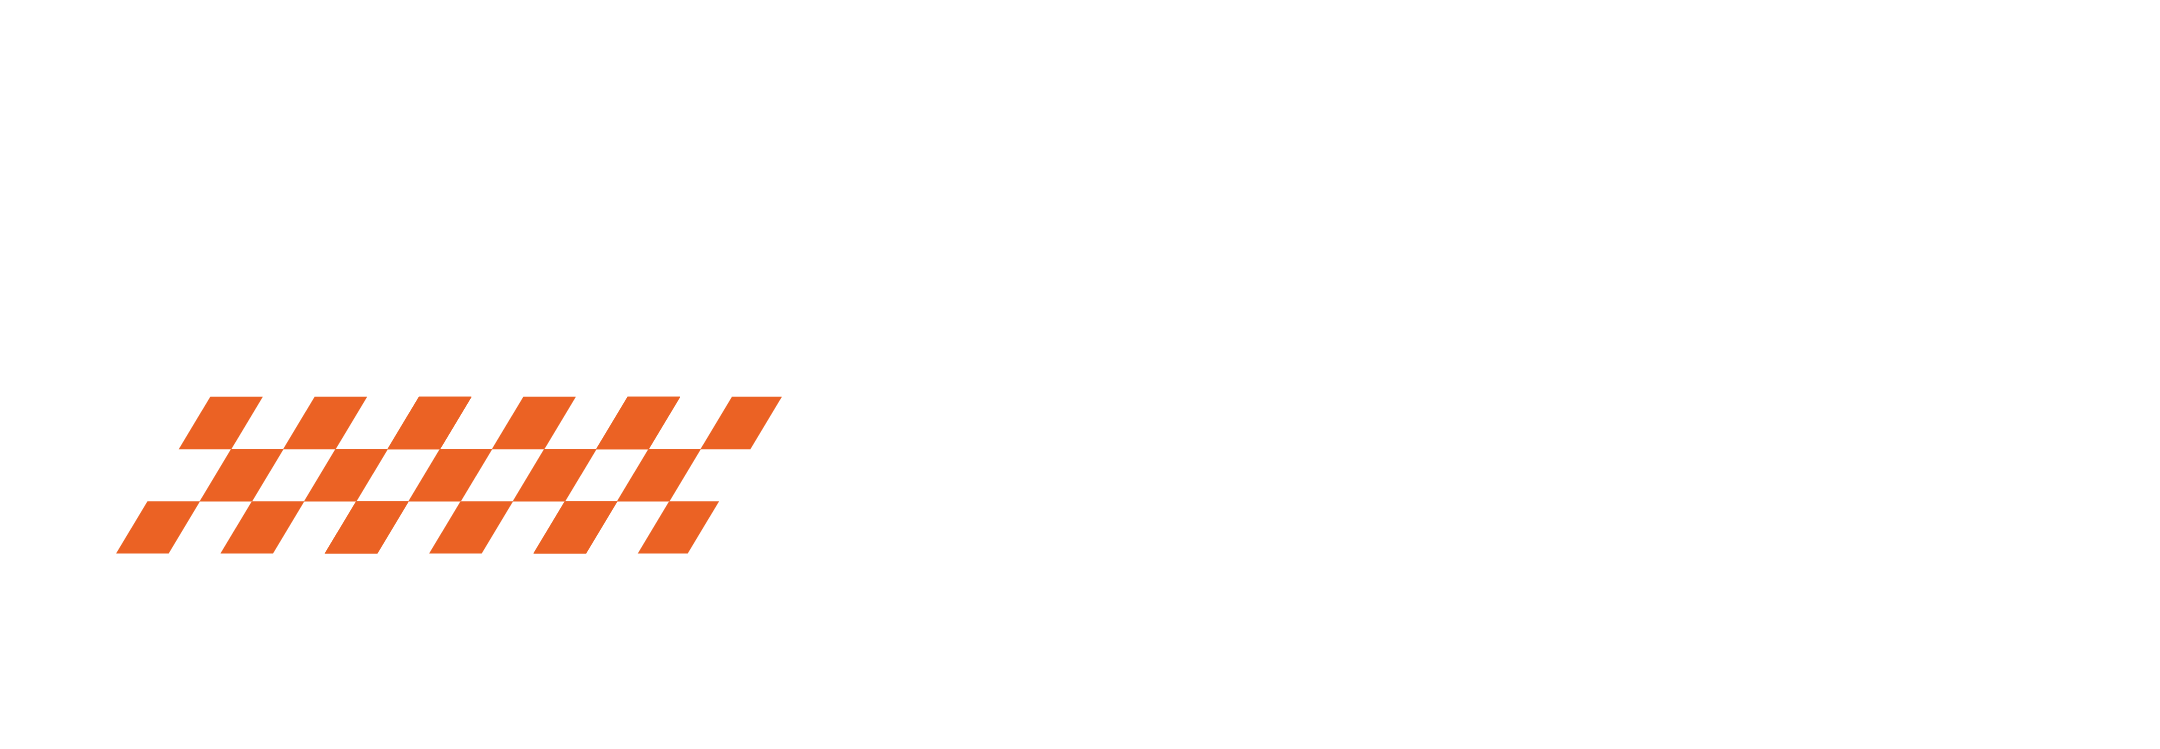 Acura Grand Prix of Long Beach logo